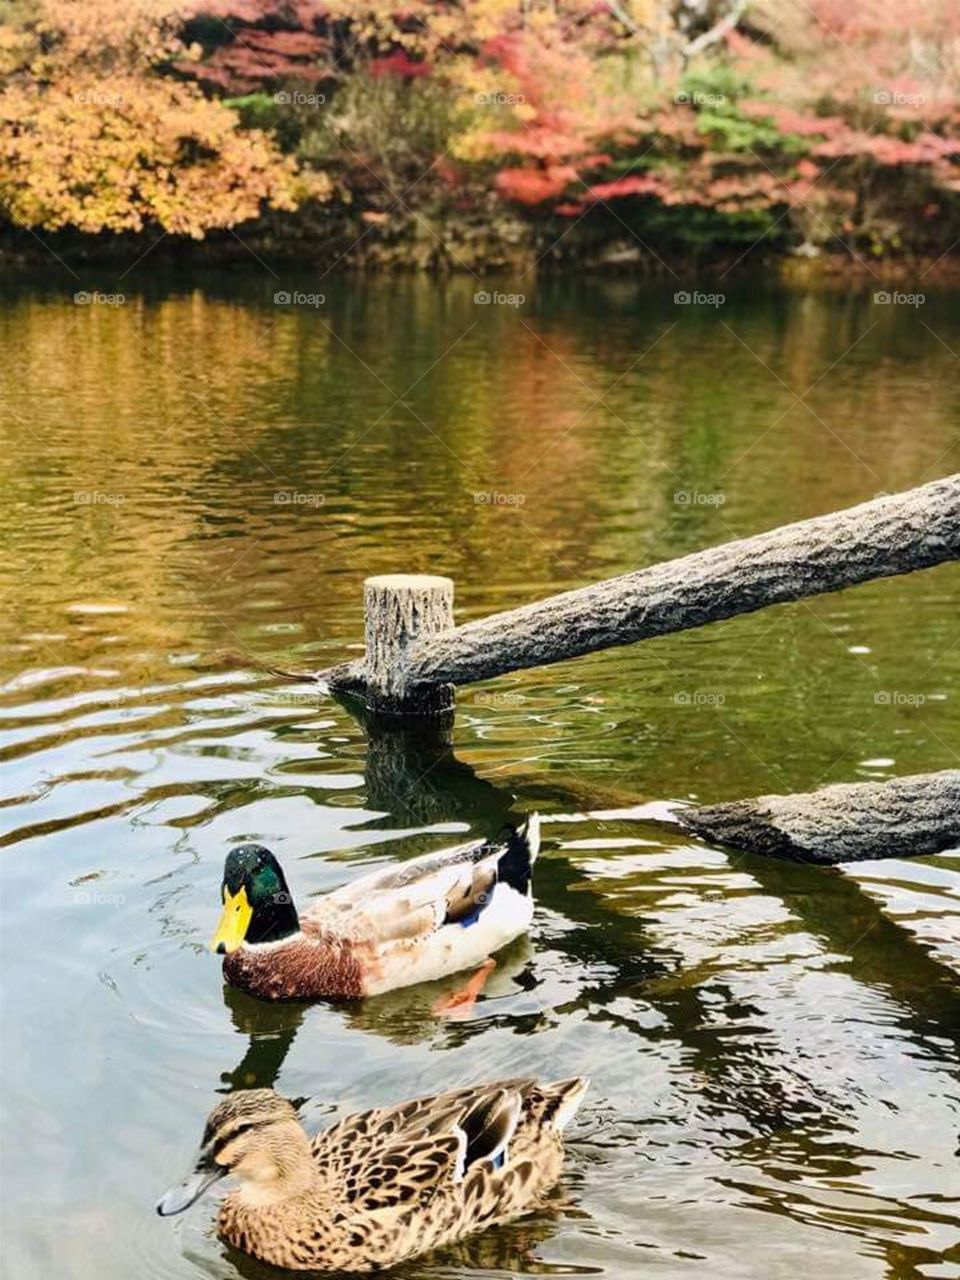 The River Ducks